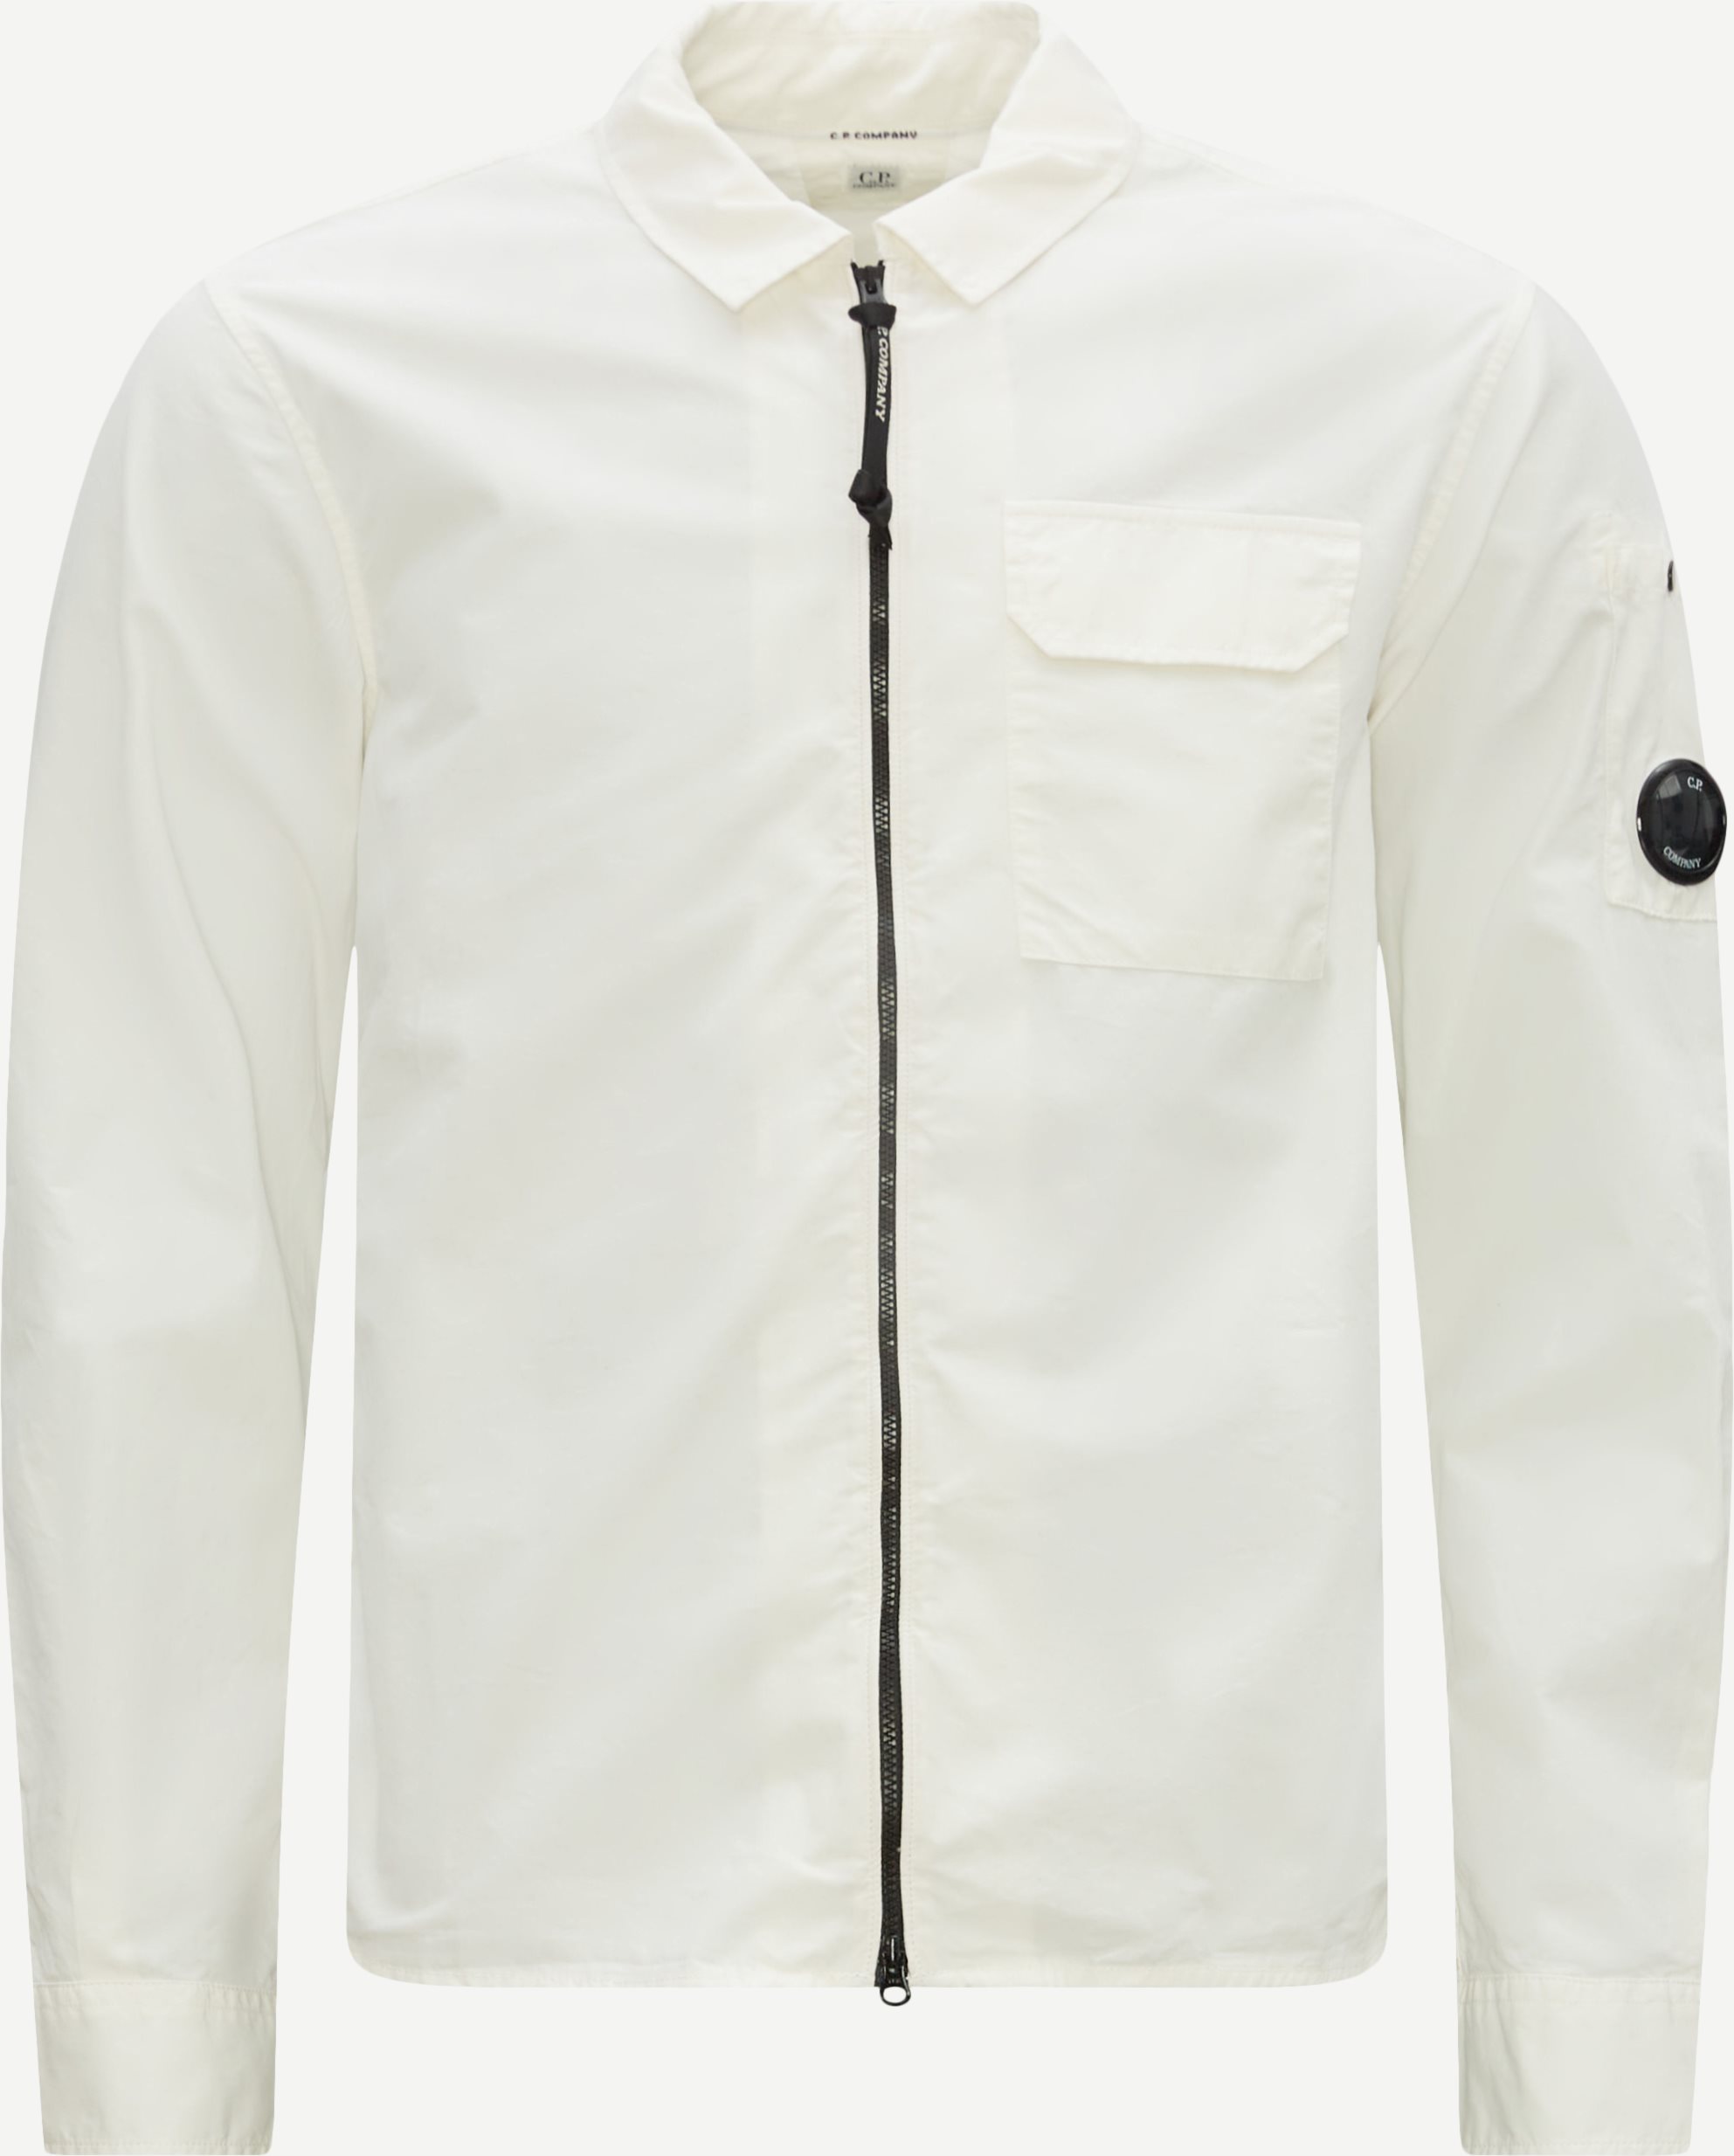 C.P. Company Shirts SH158A 2824G SS23 White